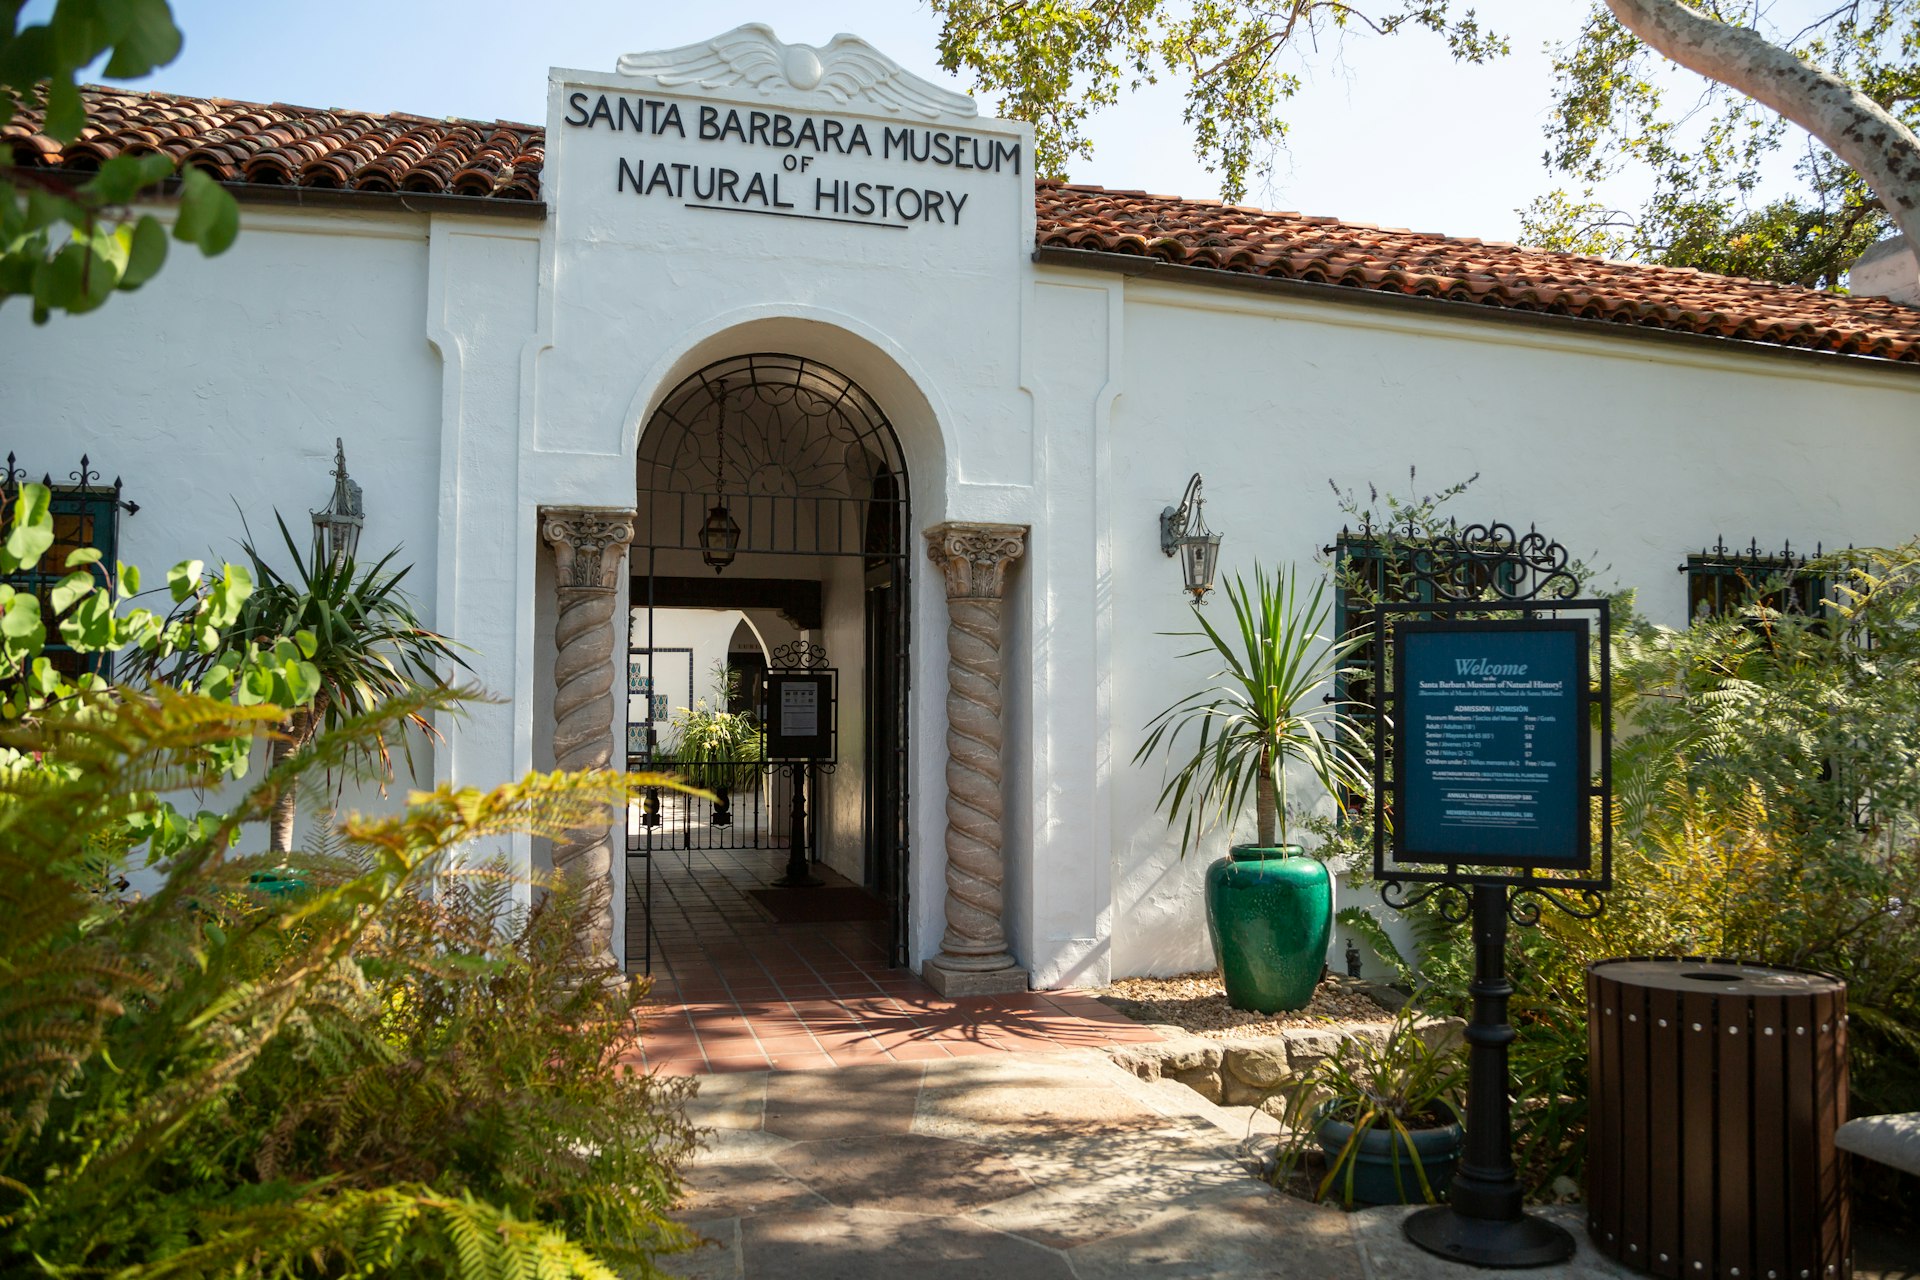 Entrance to the Santa Barbara Natural History Museum, a popular tourist destination